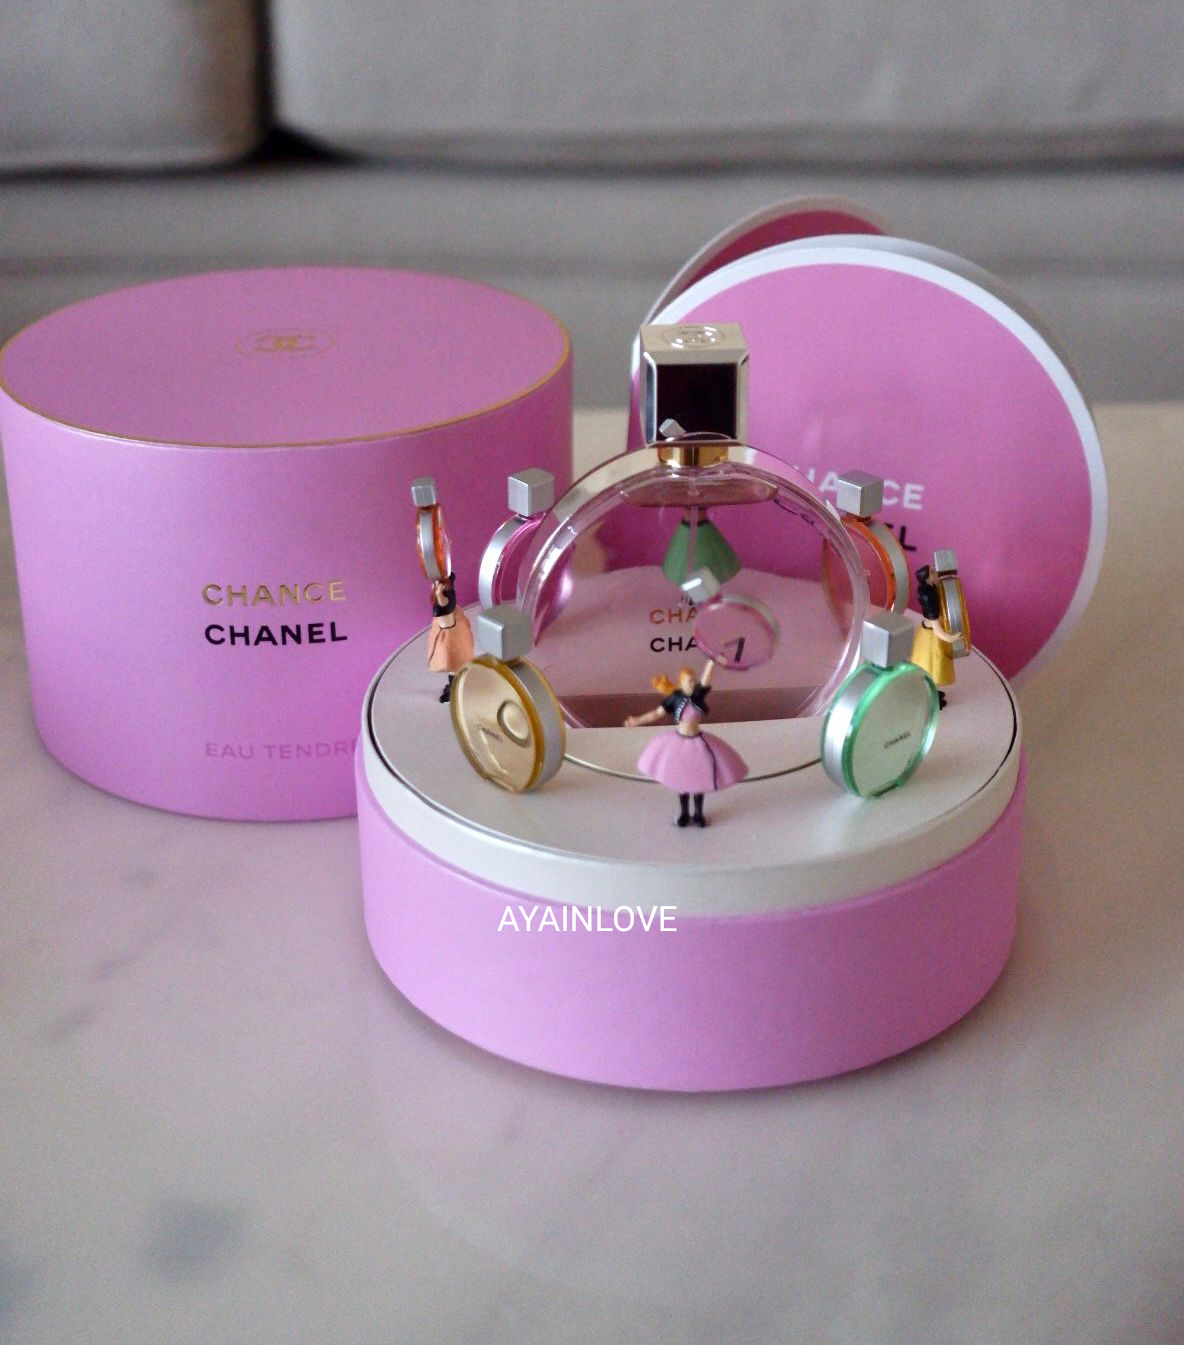 CHANEL Chance Purple Gift Box